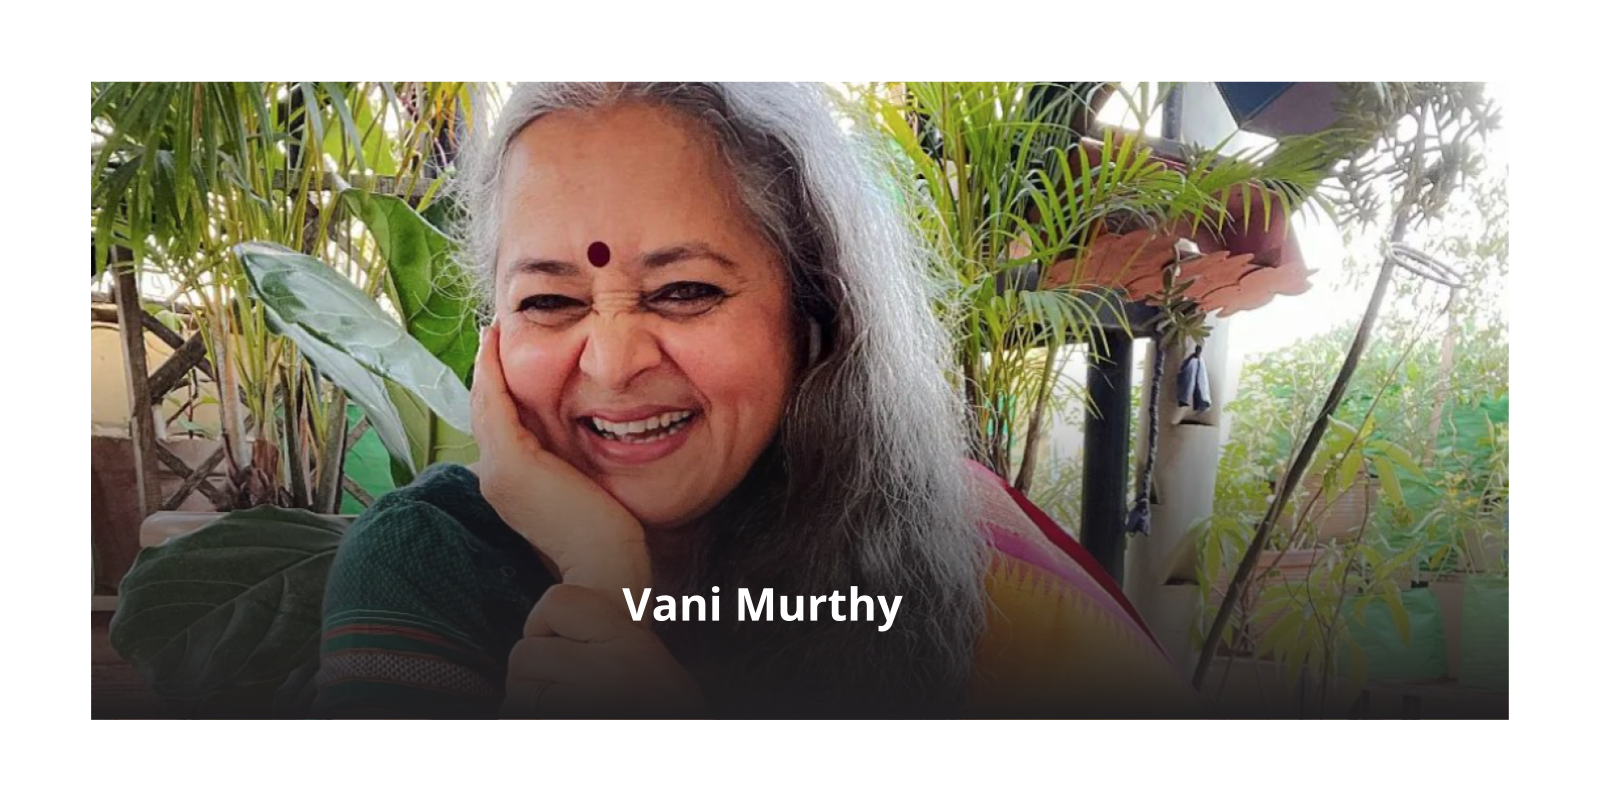 Urban farmer, influencer, Worm Rani—the many faces of Vani Murthy 